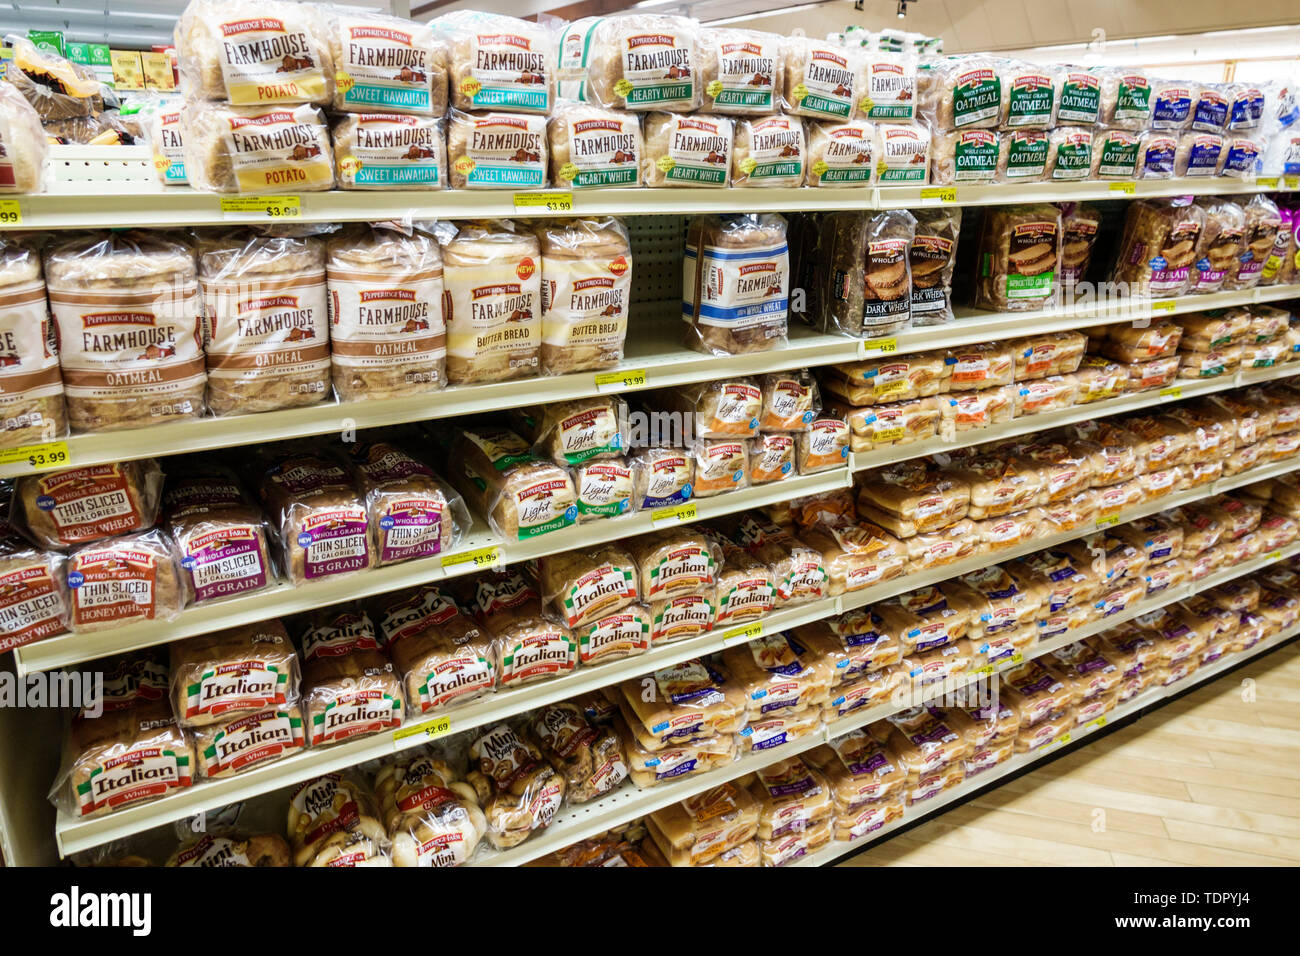 Sanibel Island Florida,Jerry's Foods,grocery store supermarket,inside interior,shelves display sale,bread,packaged loaf,FL190508018 Stock Photo